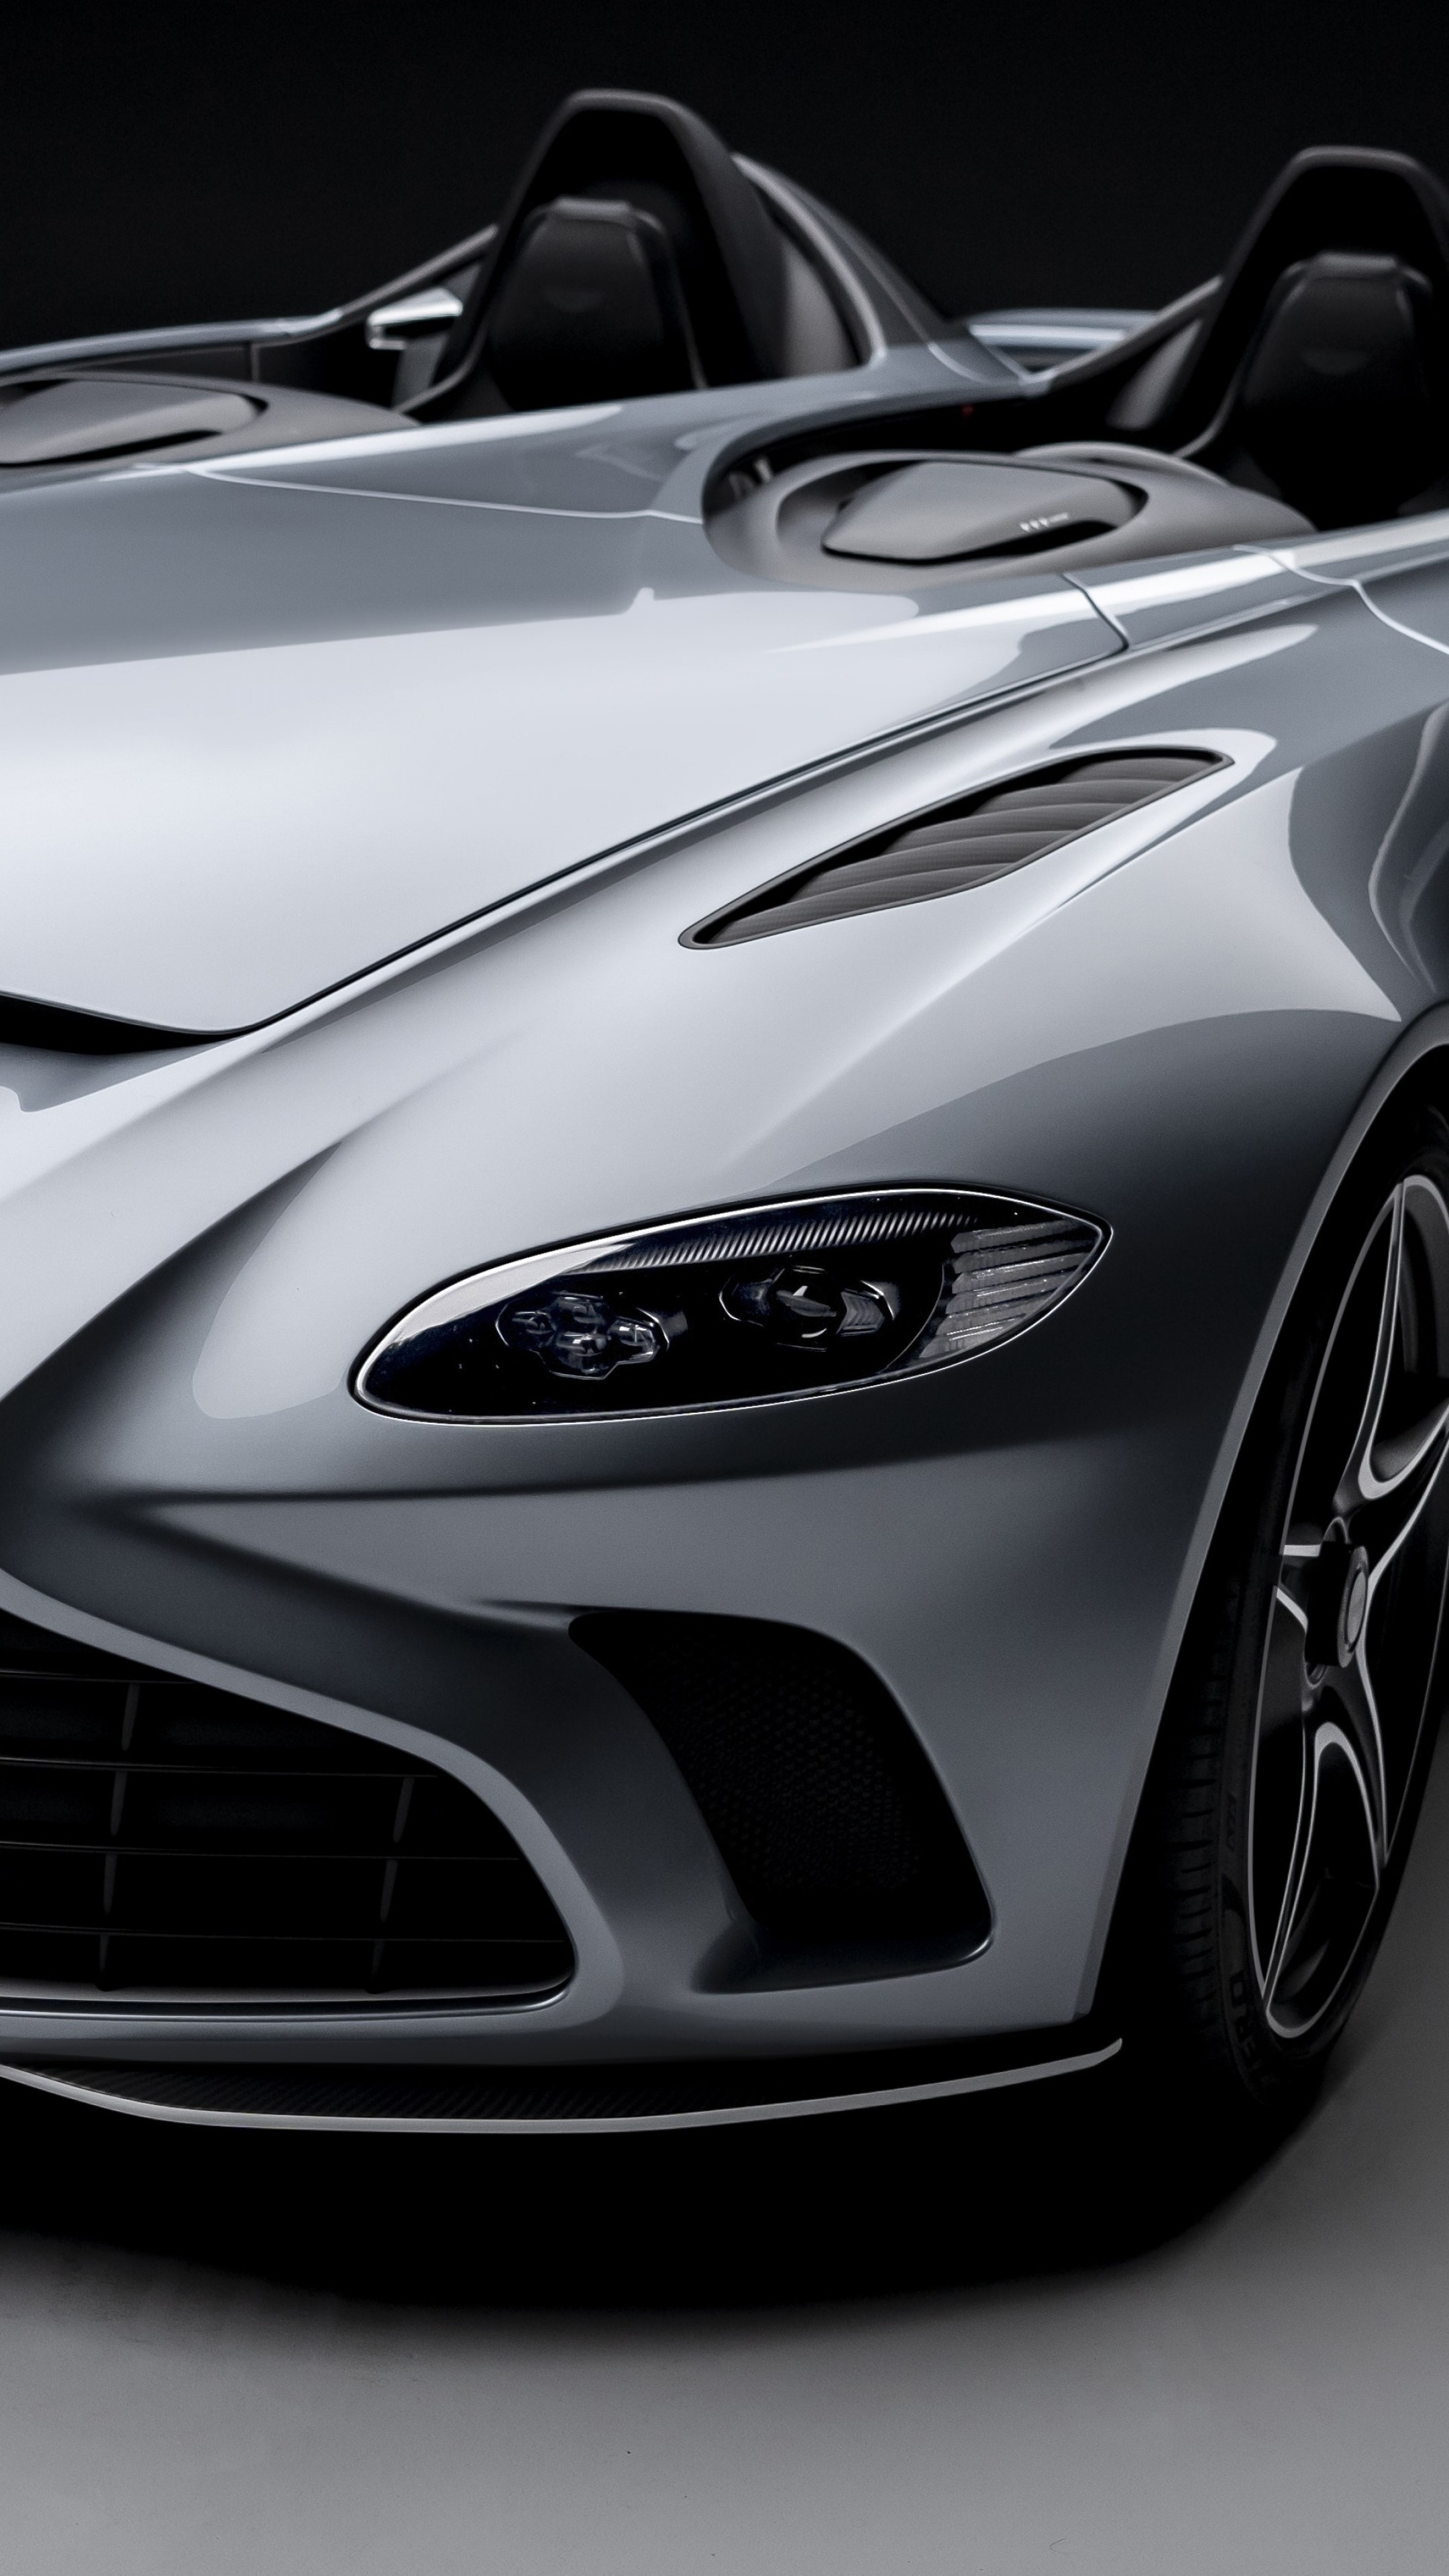 Aston Martin Speedster, Luxury sports car, Astonishing 4K wallpapers, Exclusivity at its finest, 2160x3840 4K Handy